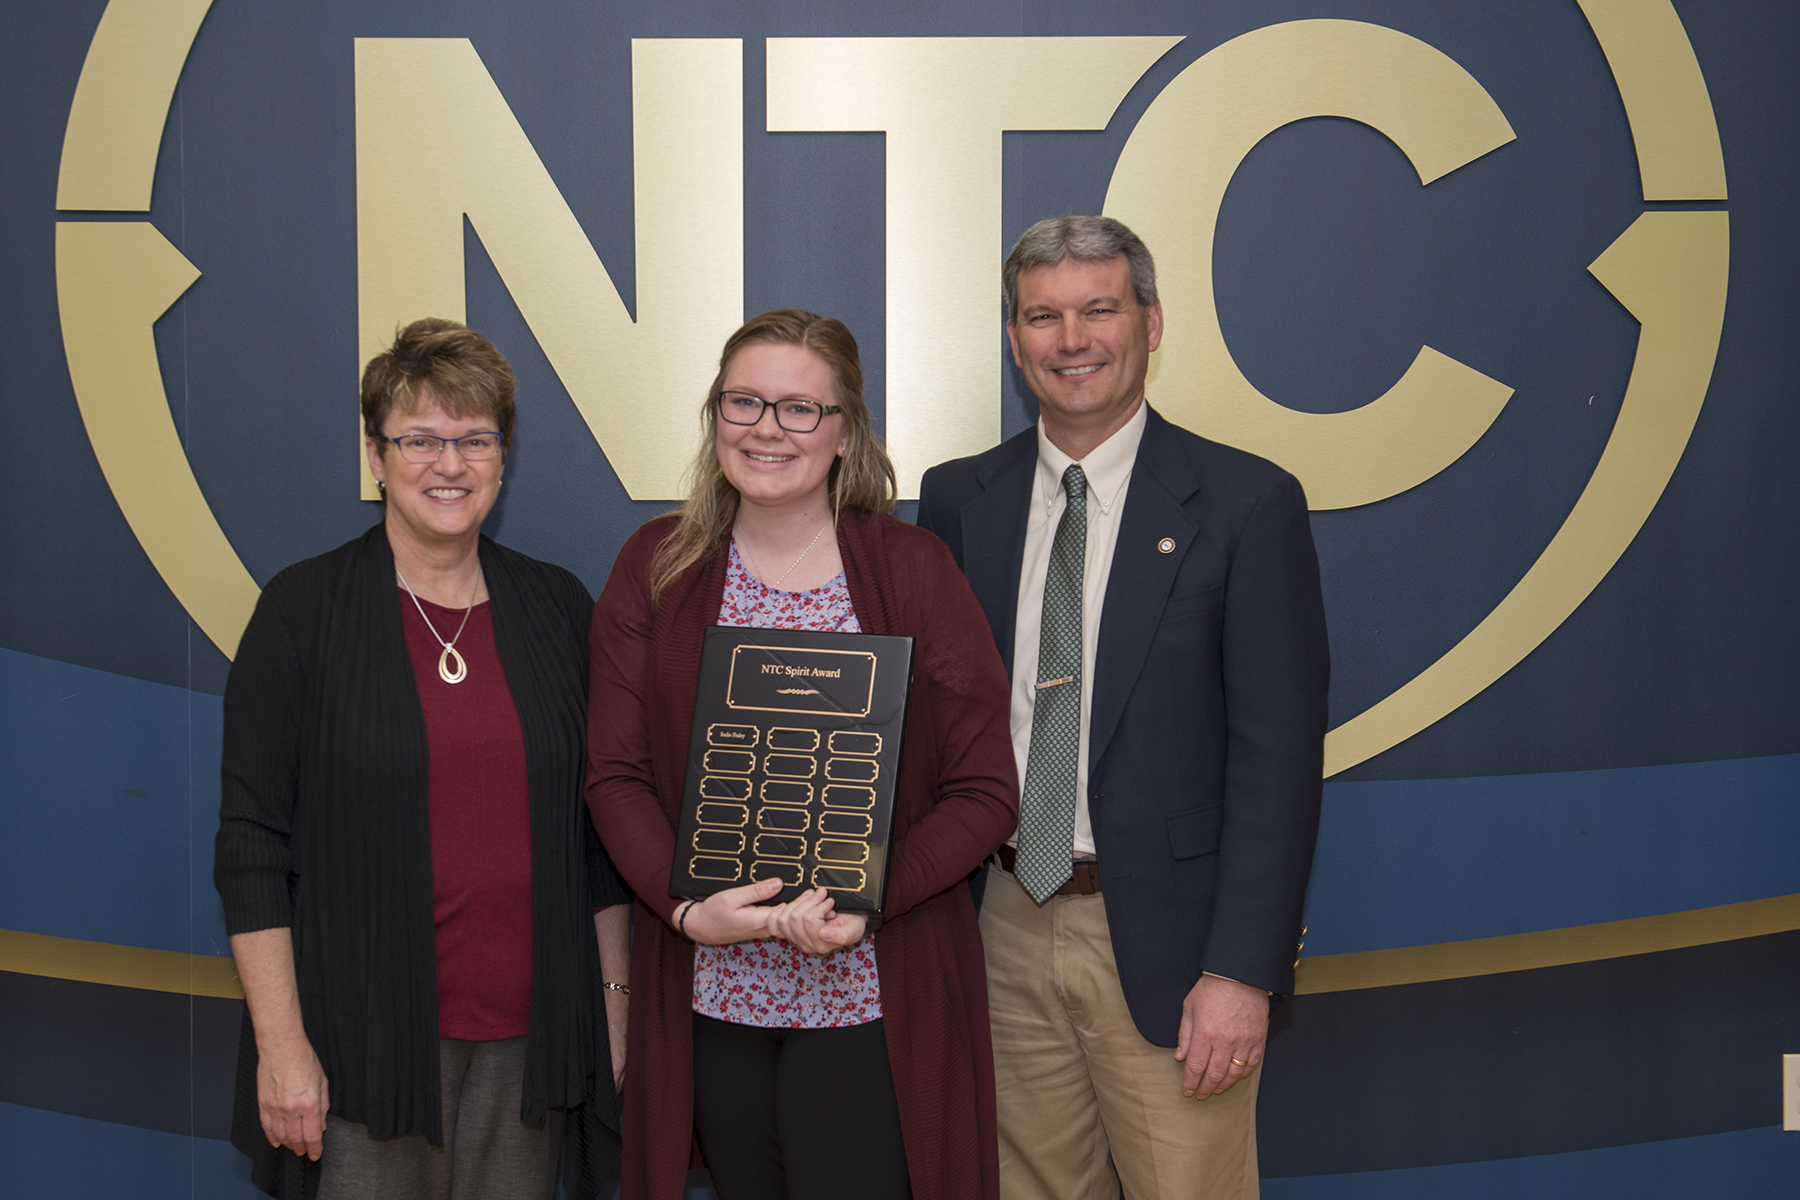 Sadie Fraley, a sophomore from Northome, Minn. won the NTC Spirit Award.